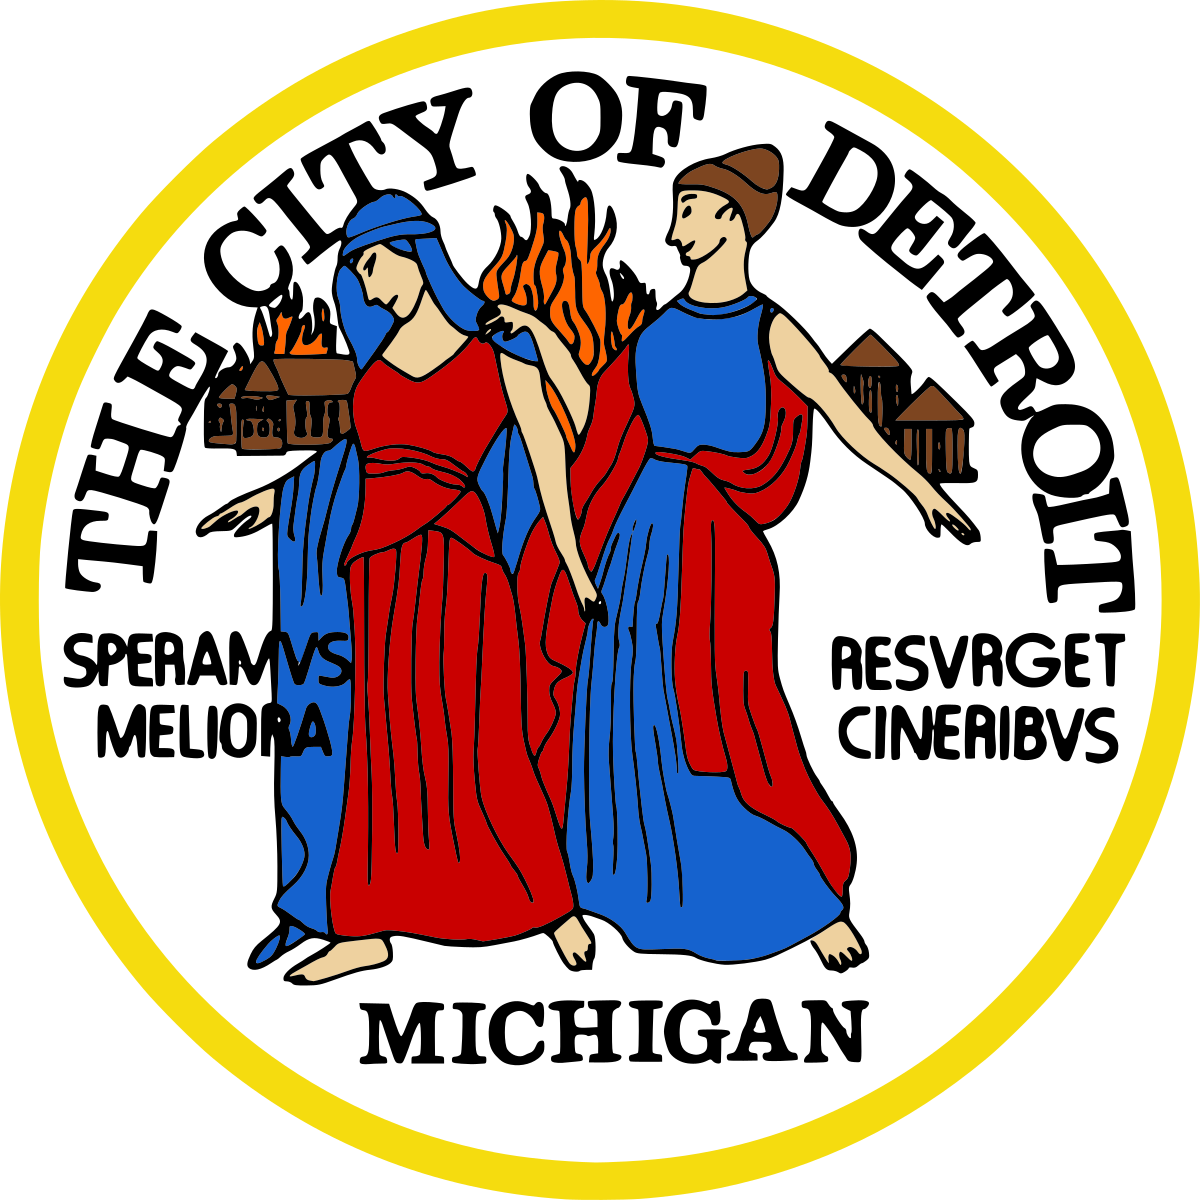 Detroit logo and seal